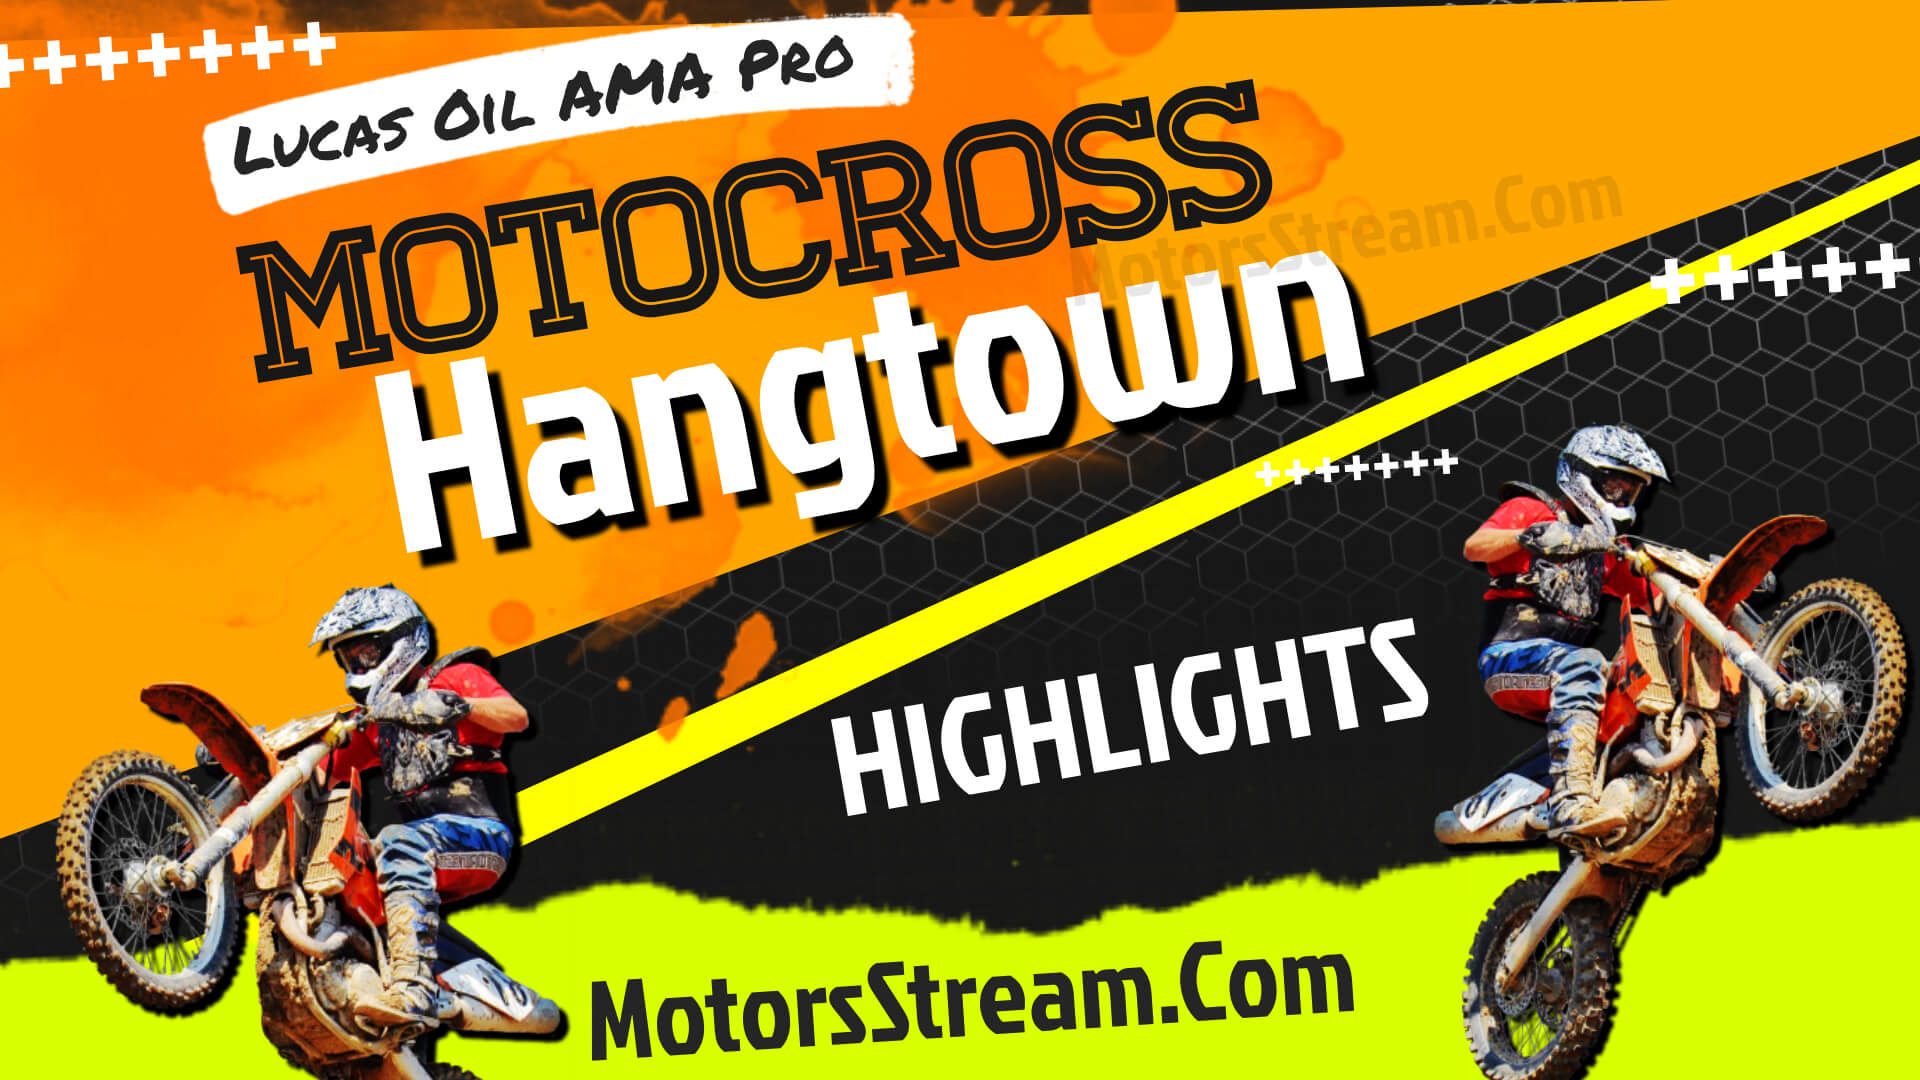 Hangtown National Highlights 2021 Motocross